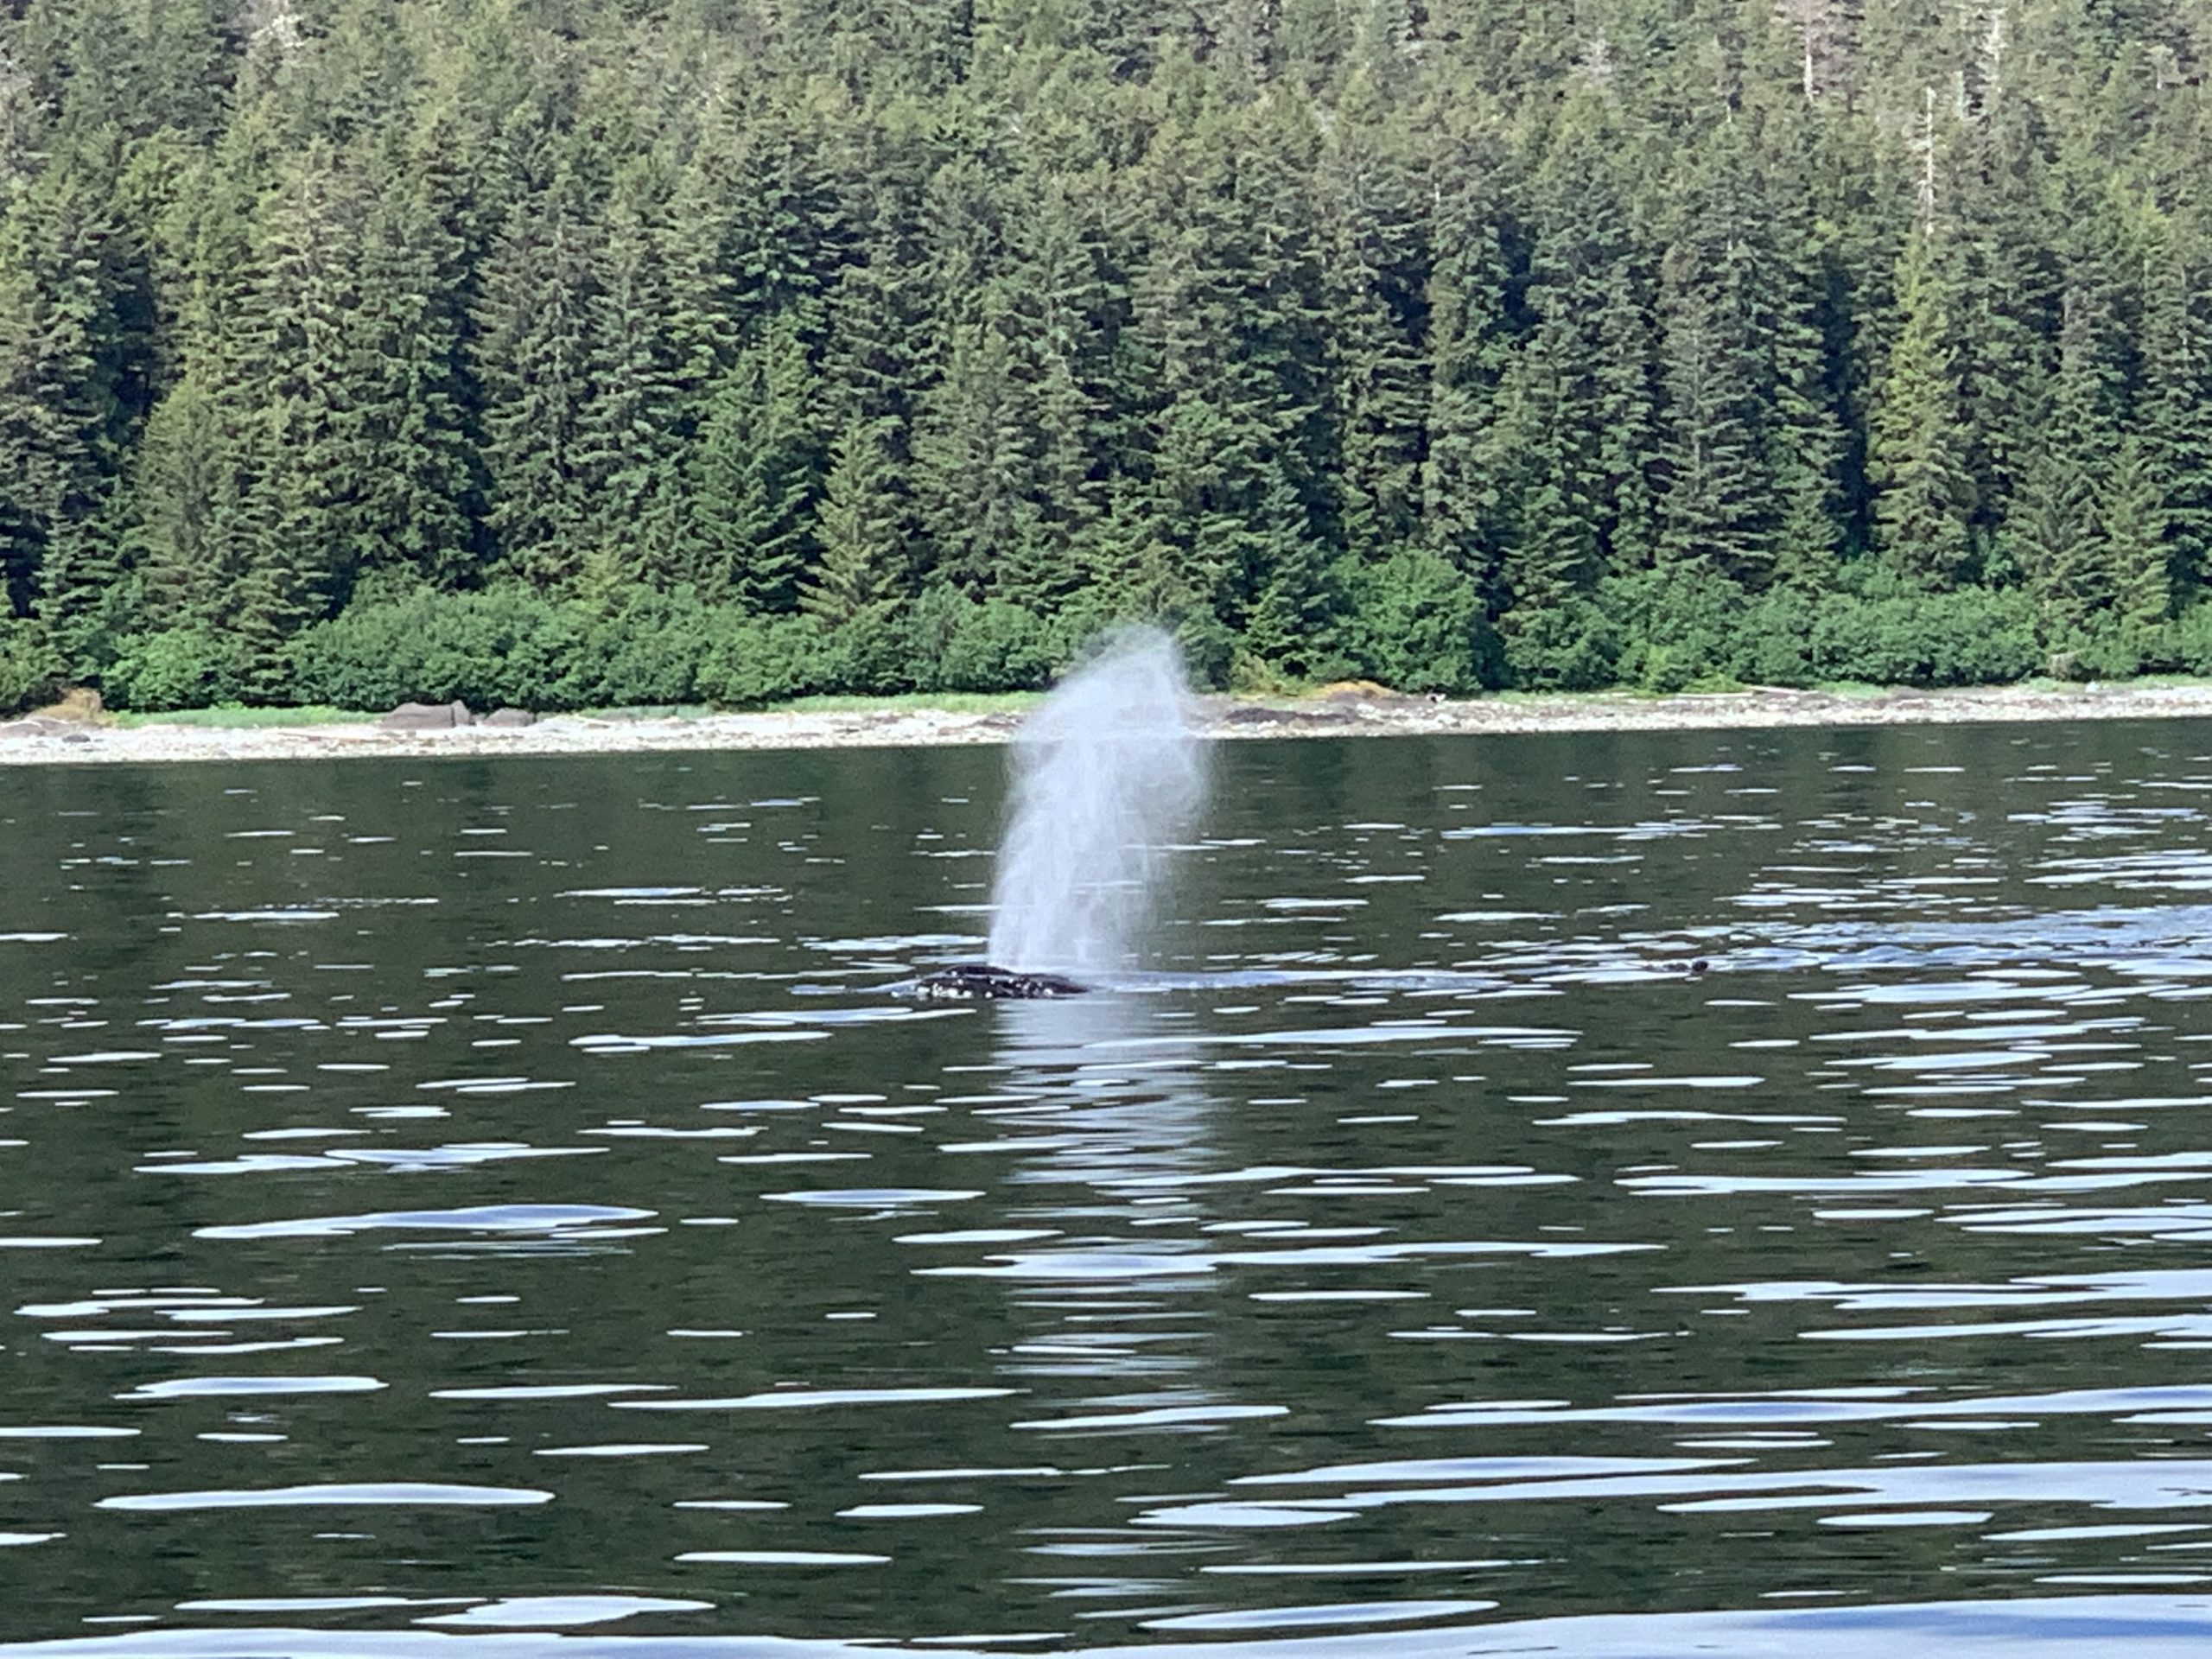 disney alaska cruise whale watching